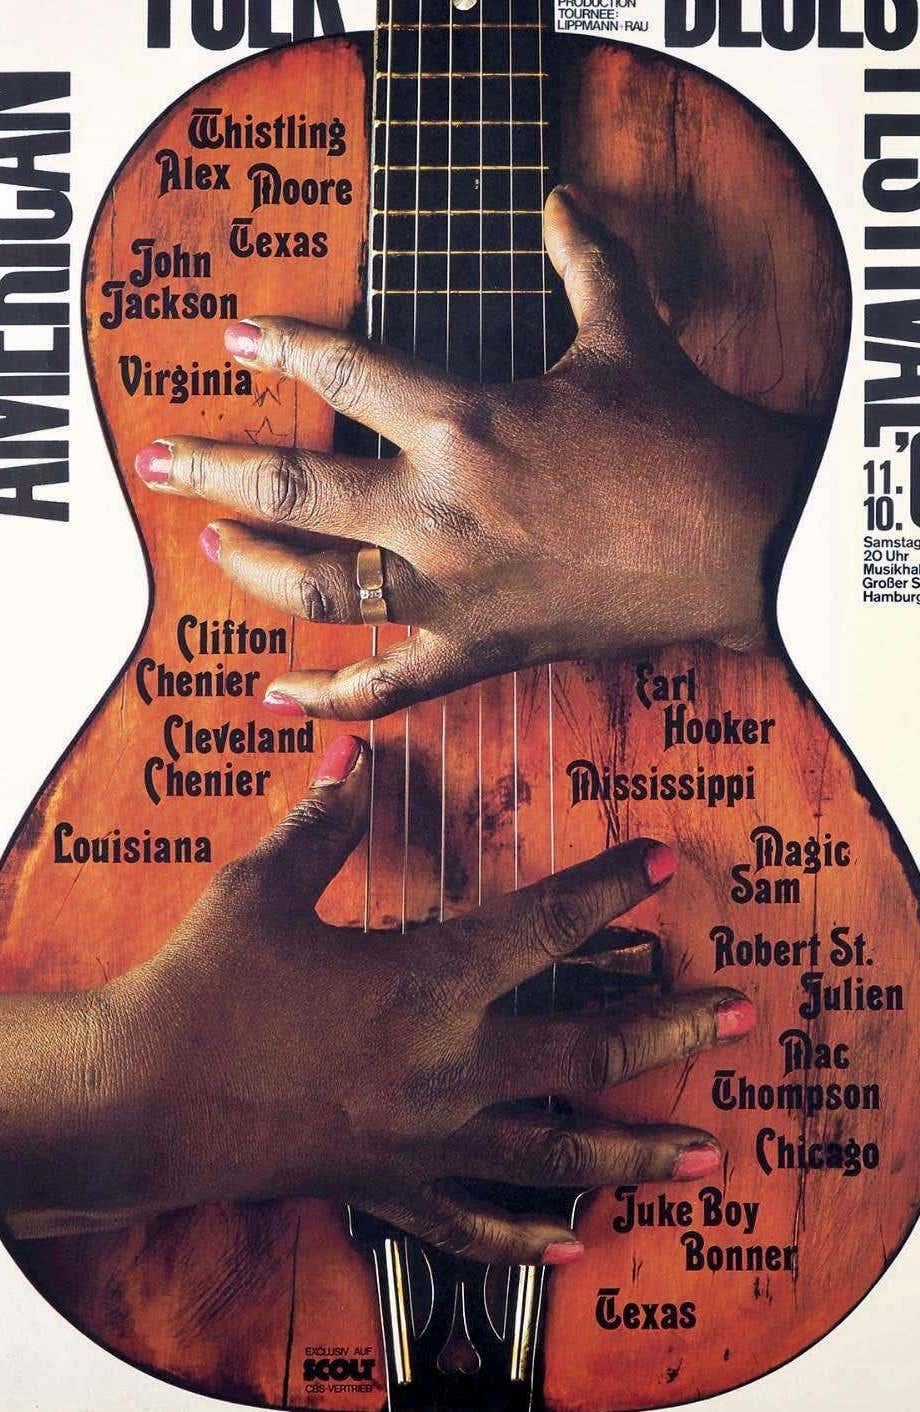 American Folk Blues Festival poster 1969 by Gunther Kieser (Blues music)  - Print by Günther Kieser